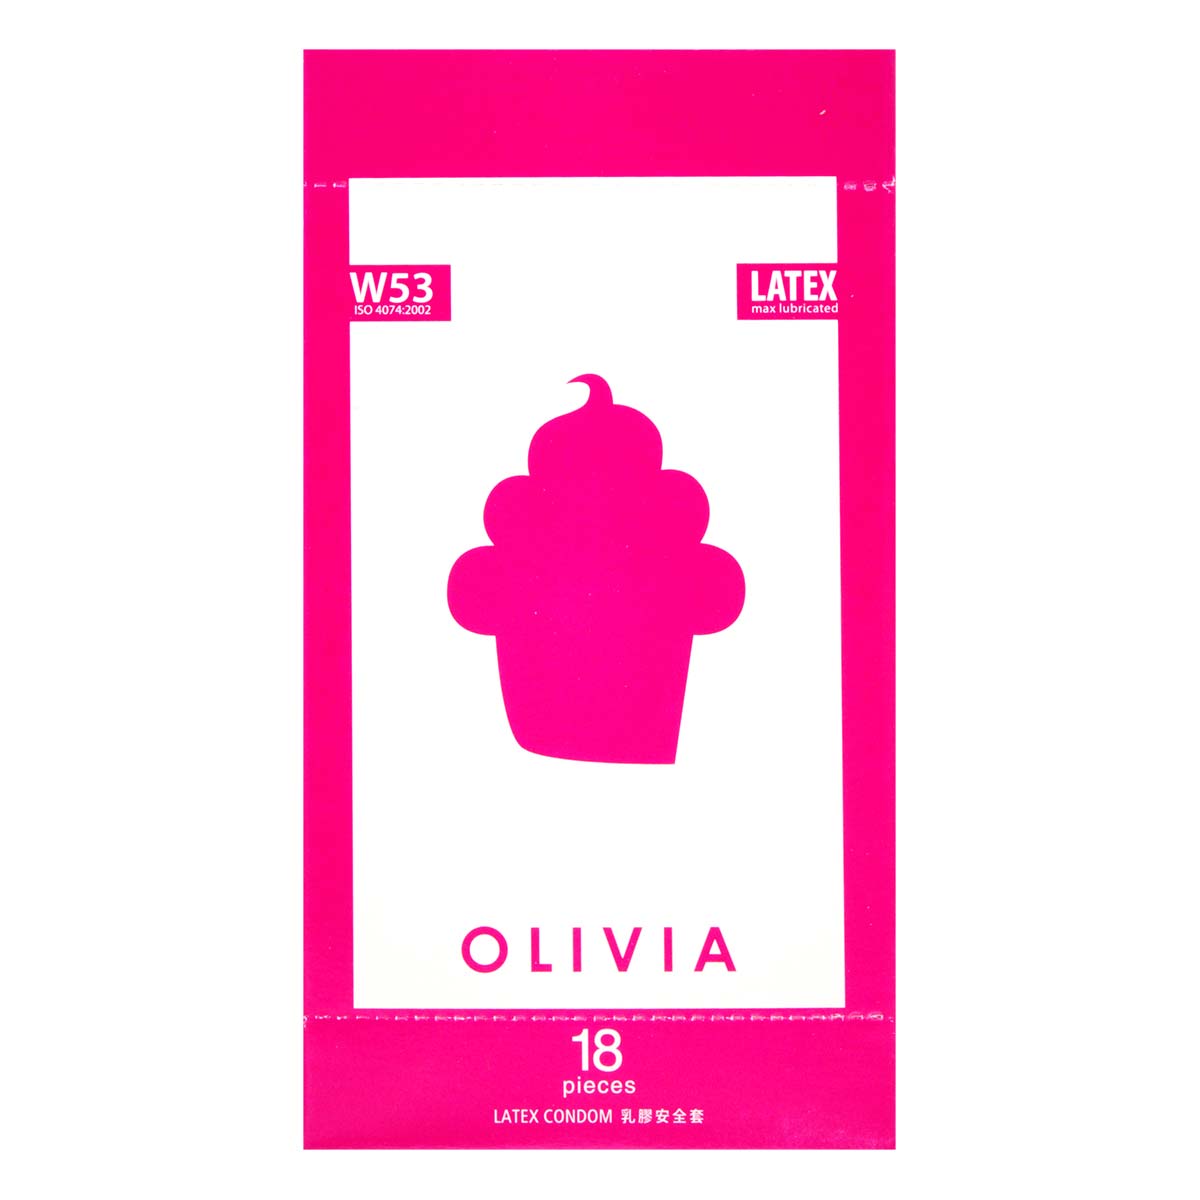 Olivia W53 max-lubricated 18's Pack Latex Condom-p_2